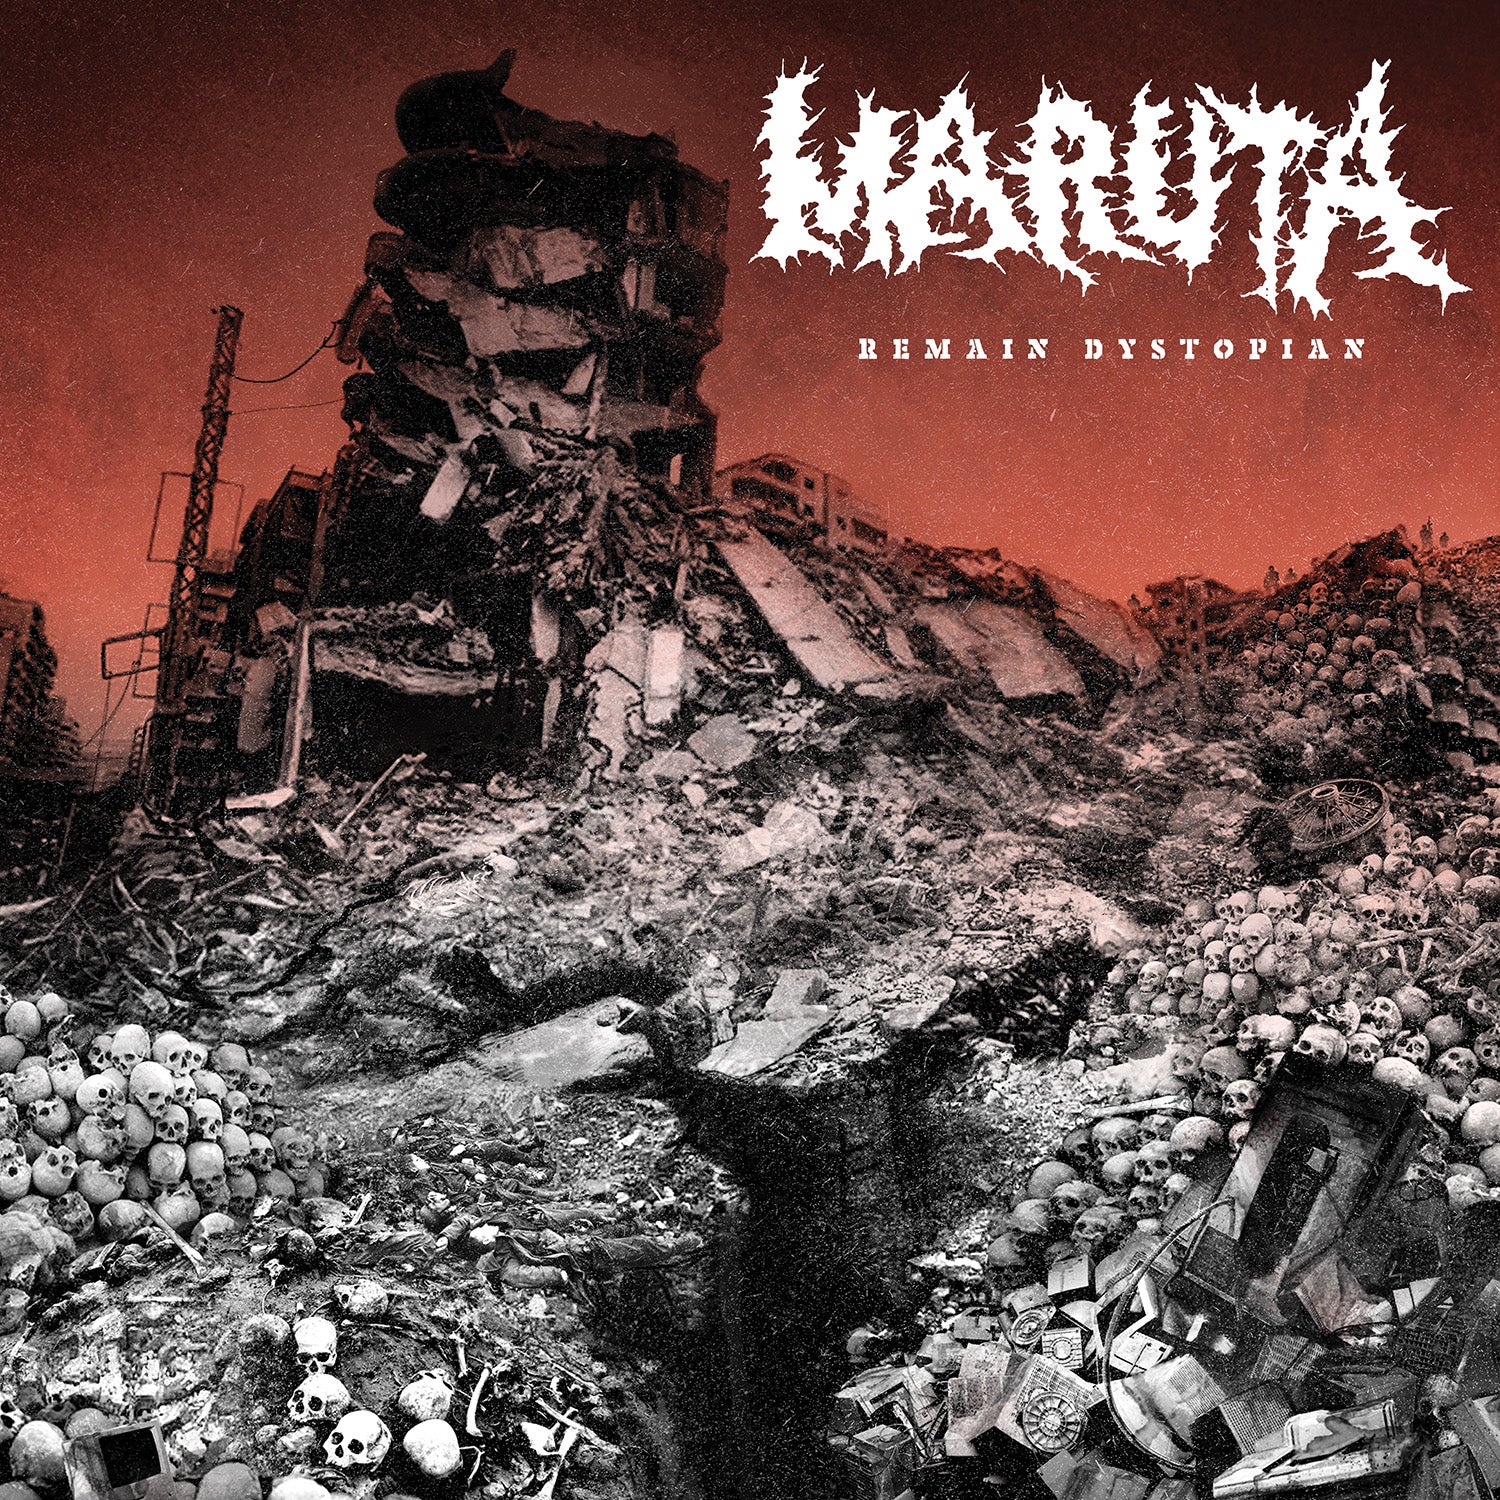 Maruta "Remain Dystopian" CD